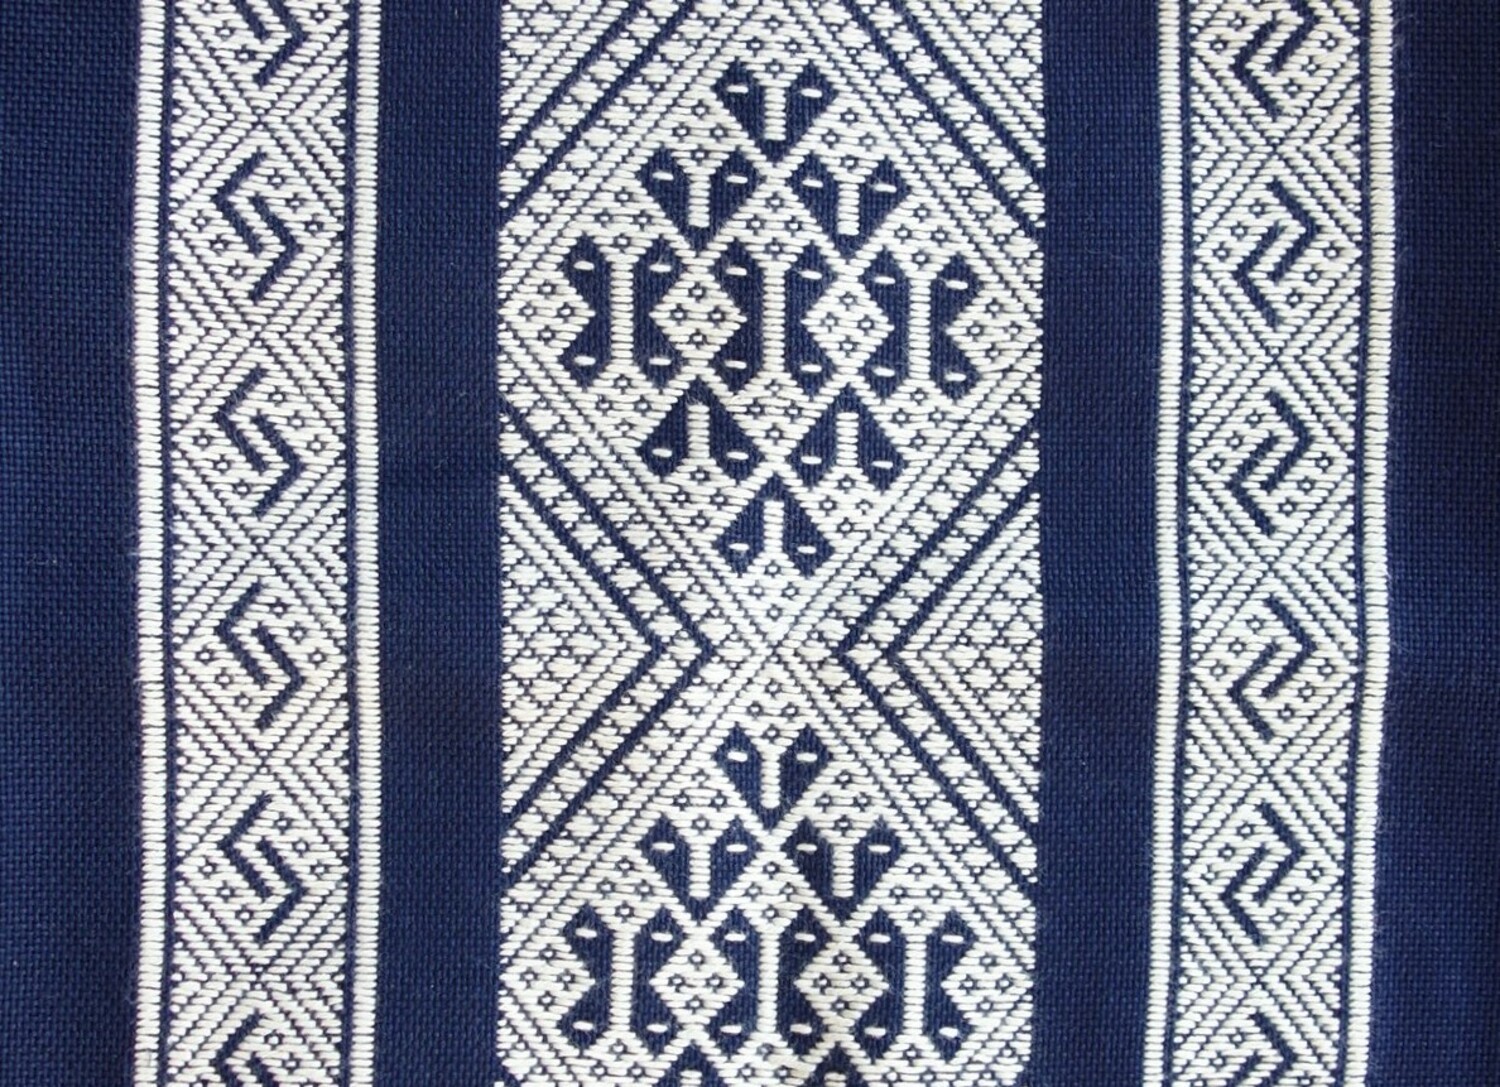 Cotton cushion cover, kogin-zashi, made by Misao Kimura, late 20th century, Japan (TRC 2021.1274).